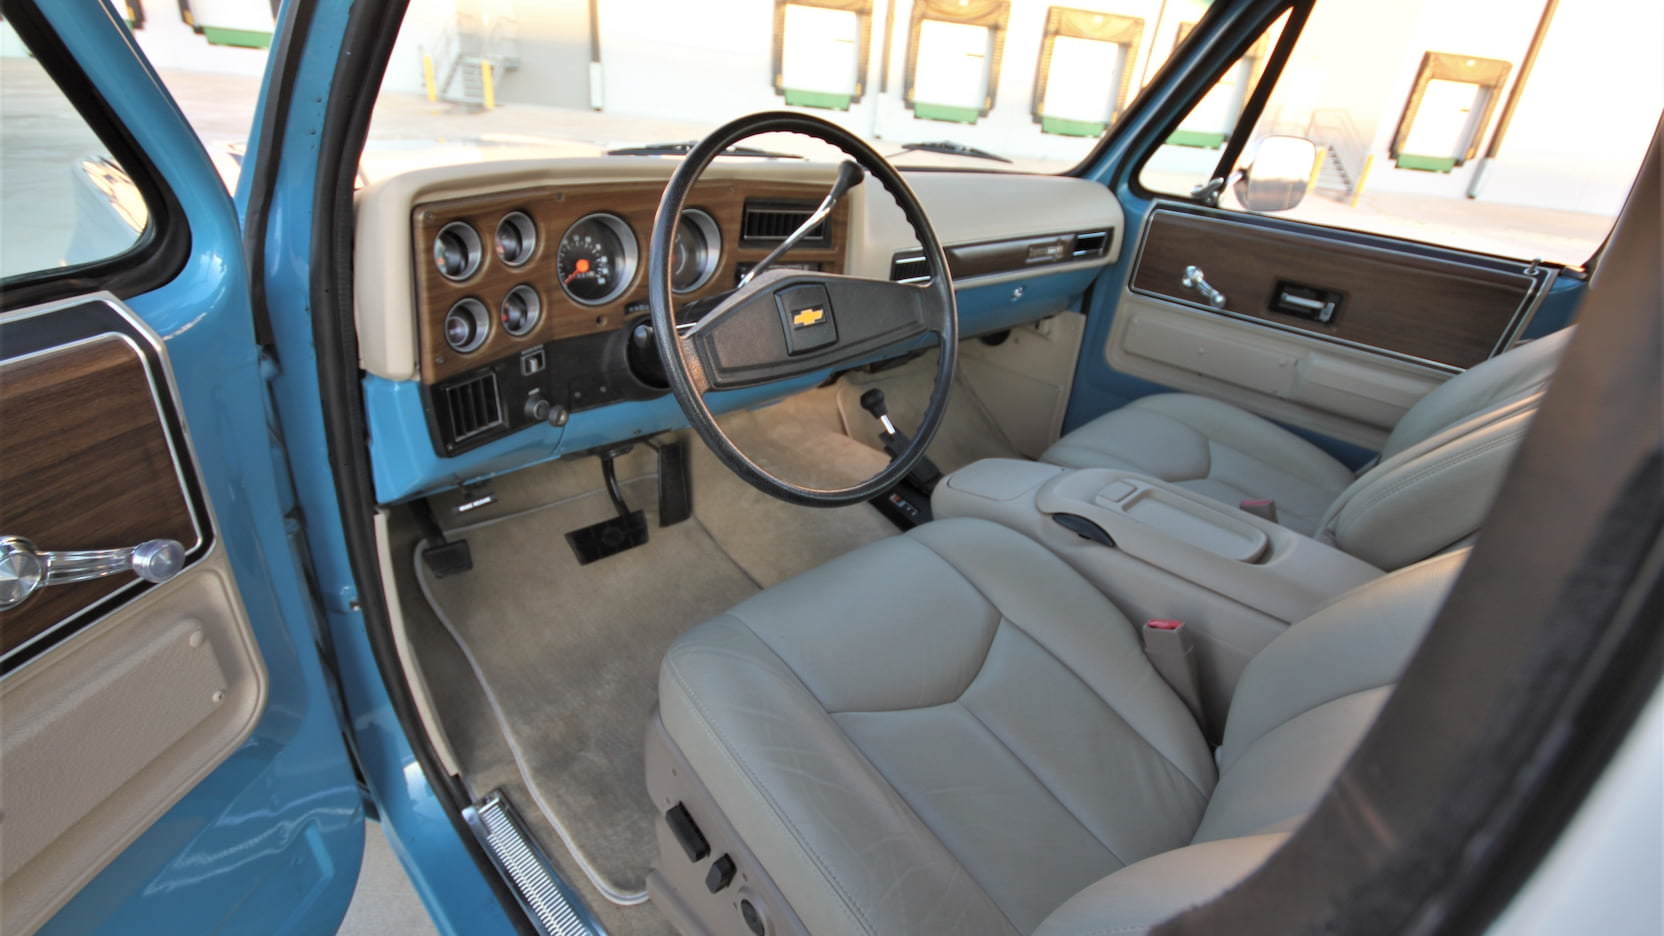 1991 K5 Blazer Interior